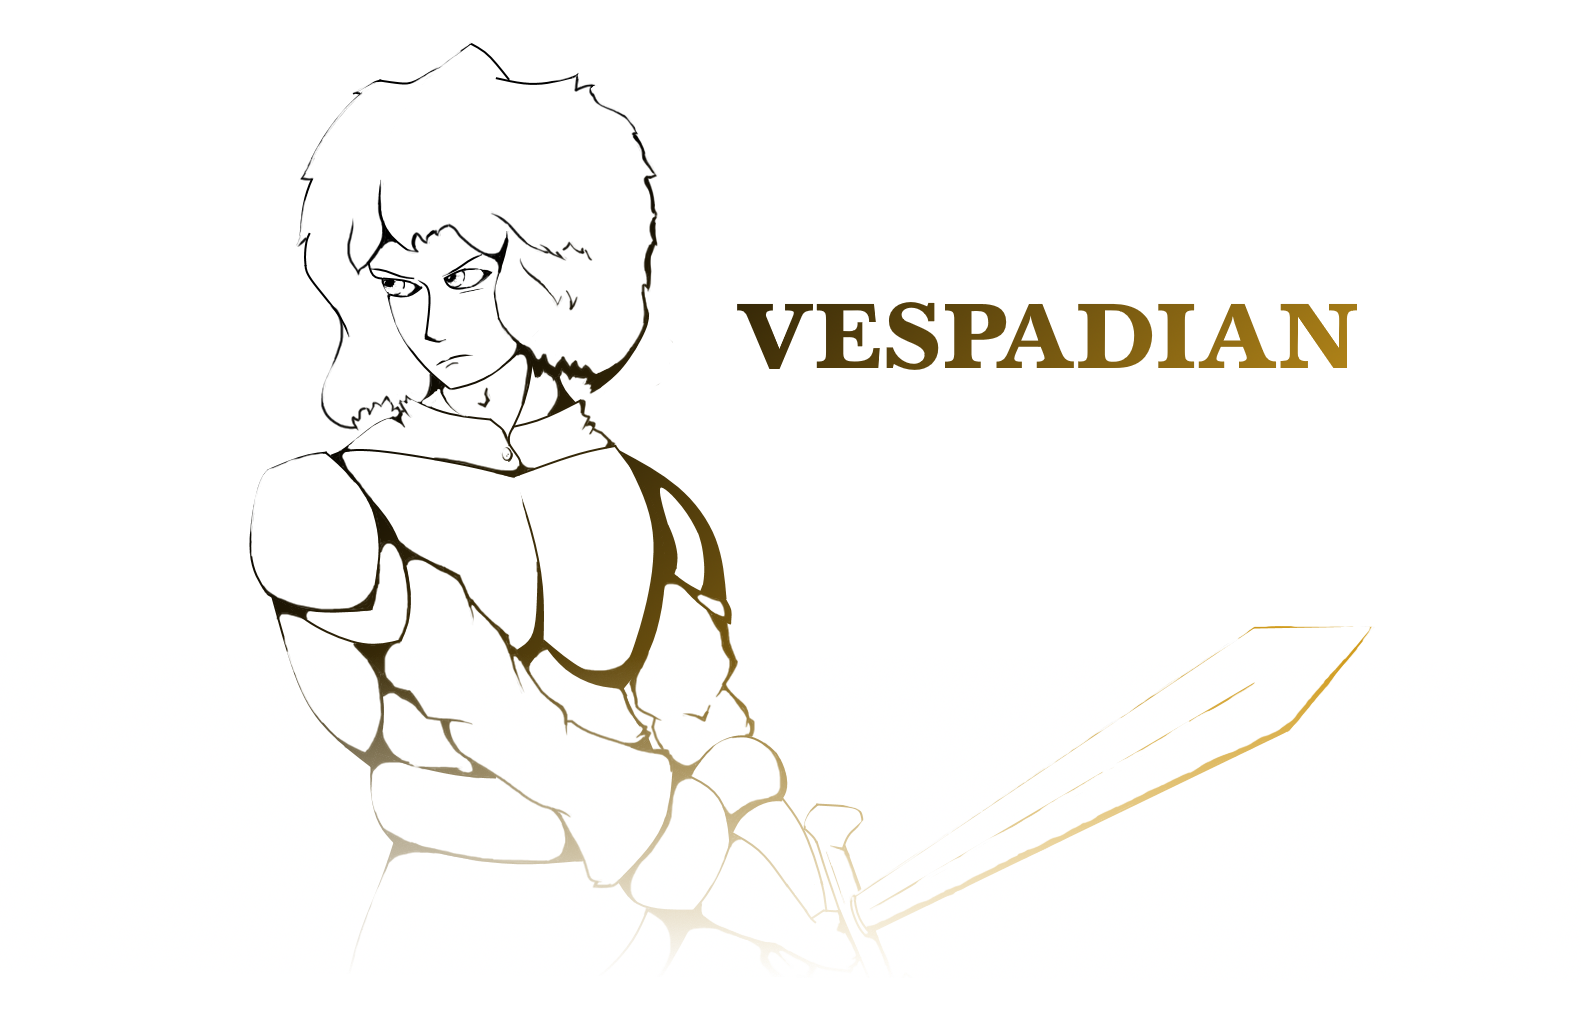 Vespadian